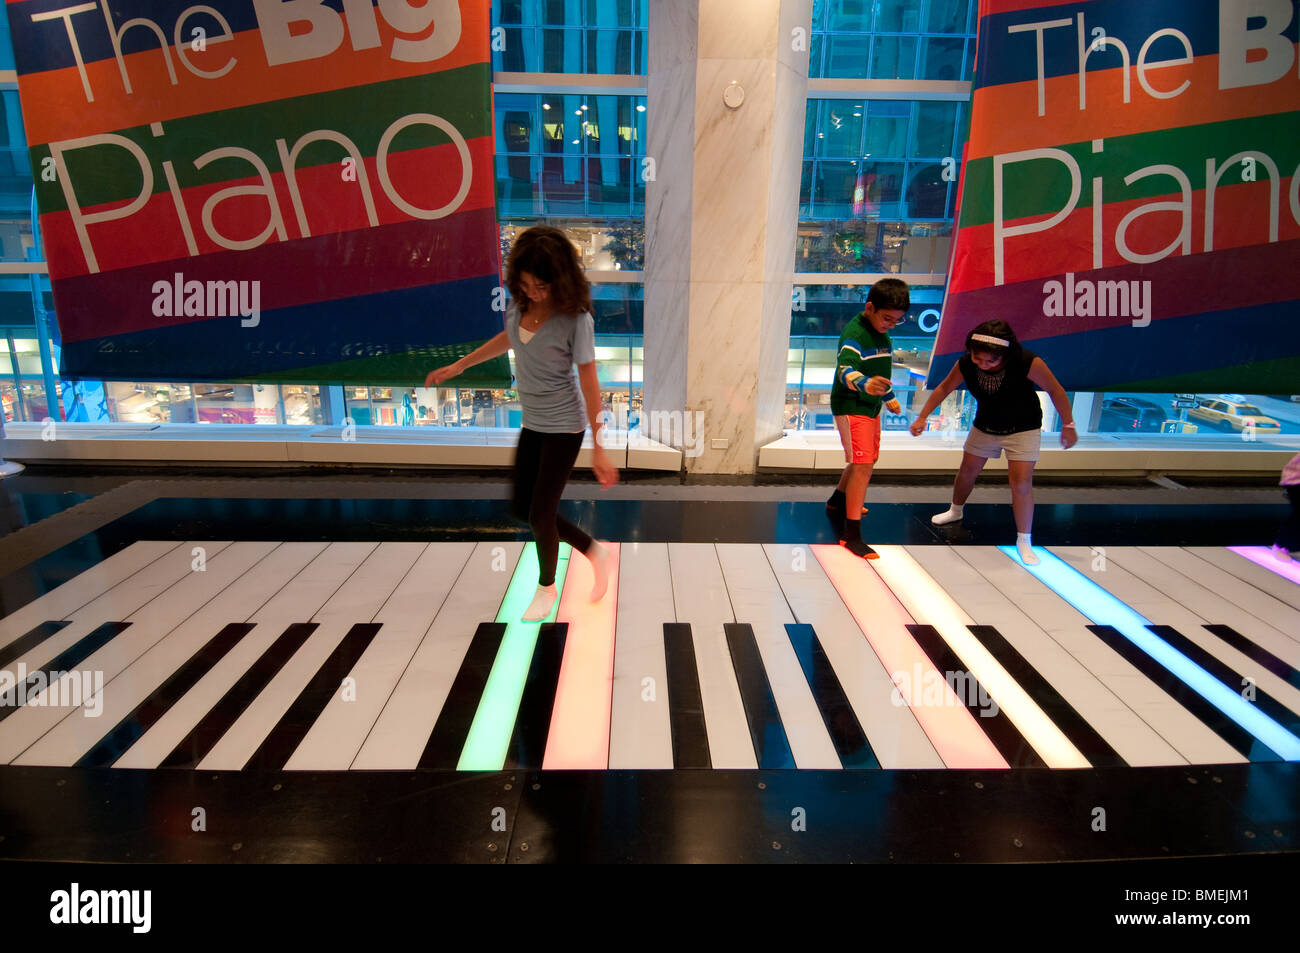 The big piano fao schwarz fotografías e imágenes de alta resolución - Alamy